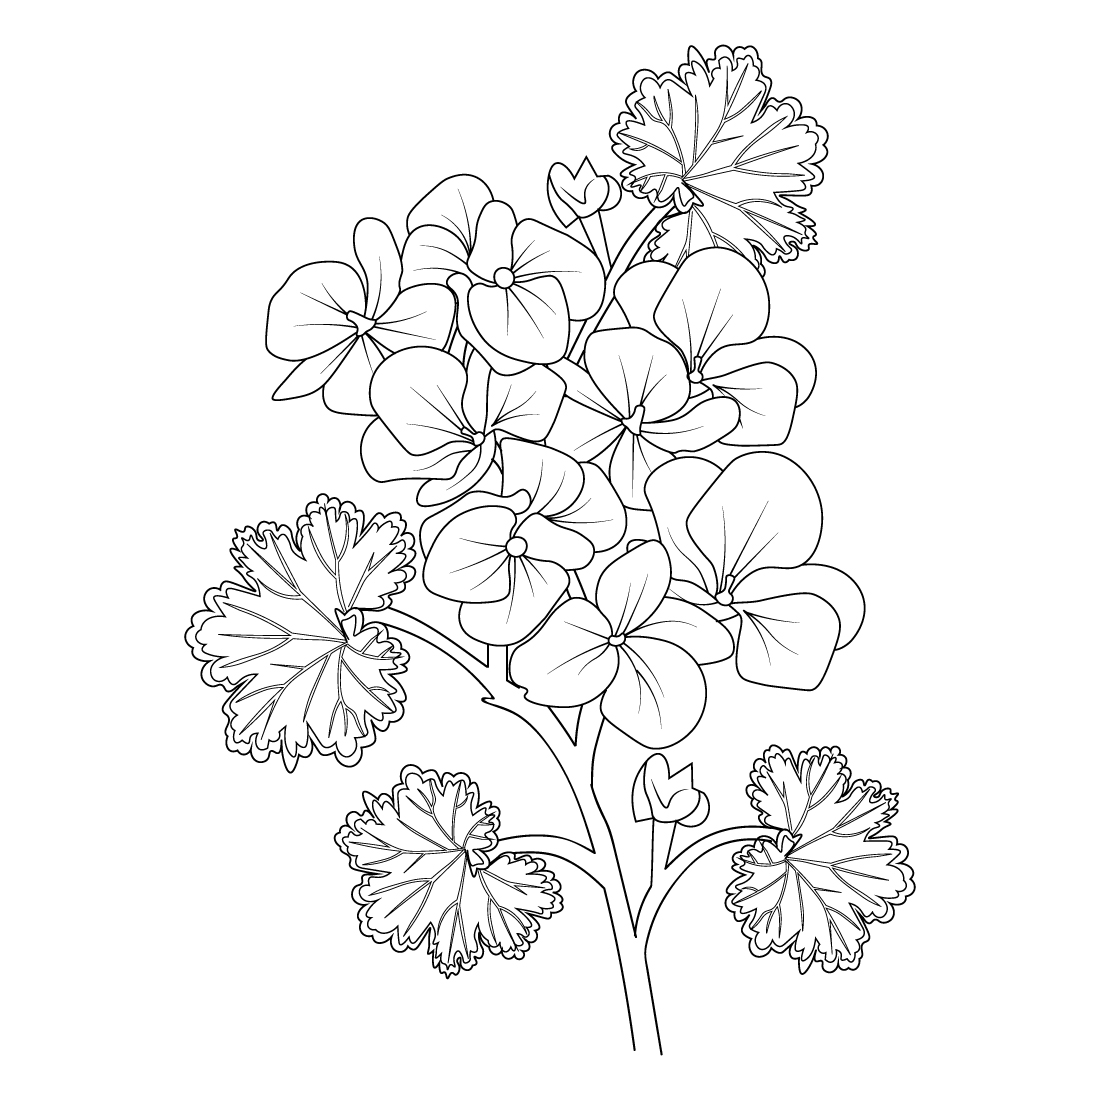 black geranium tattoo, black and white geranium flower tattoo, wild geranium drawing, drawing geranium sketch, Realistic flower coloring pages, vintage floral vector illustration preview image.